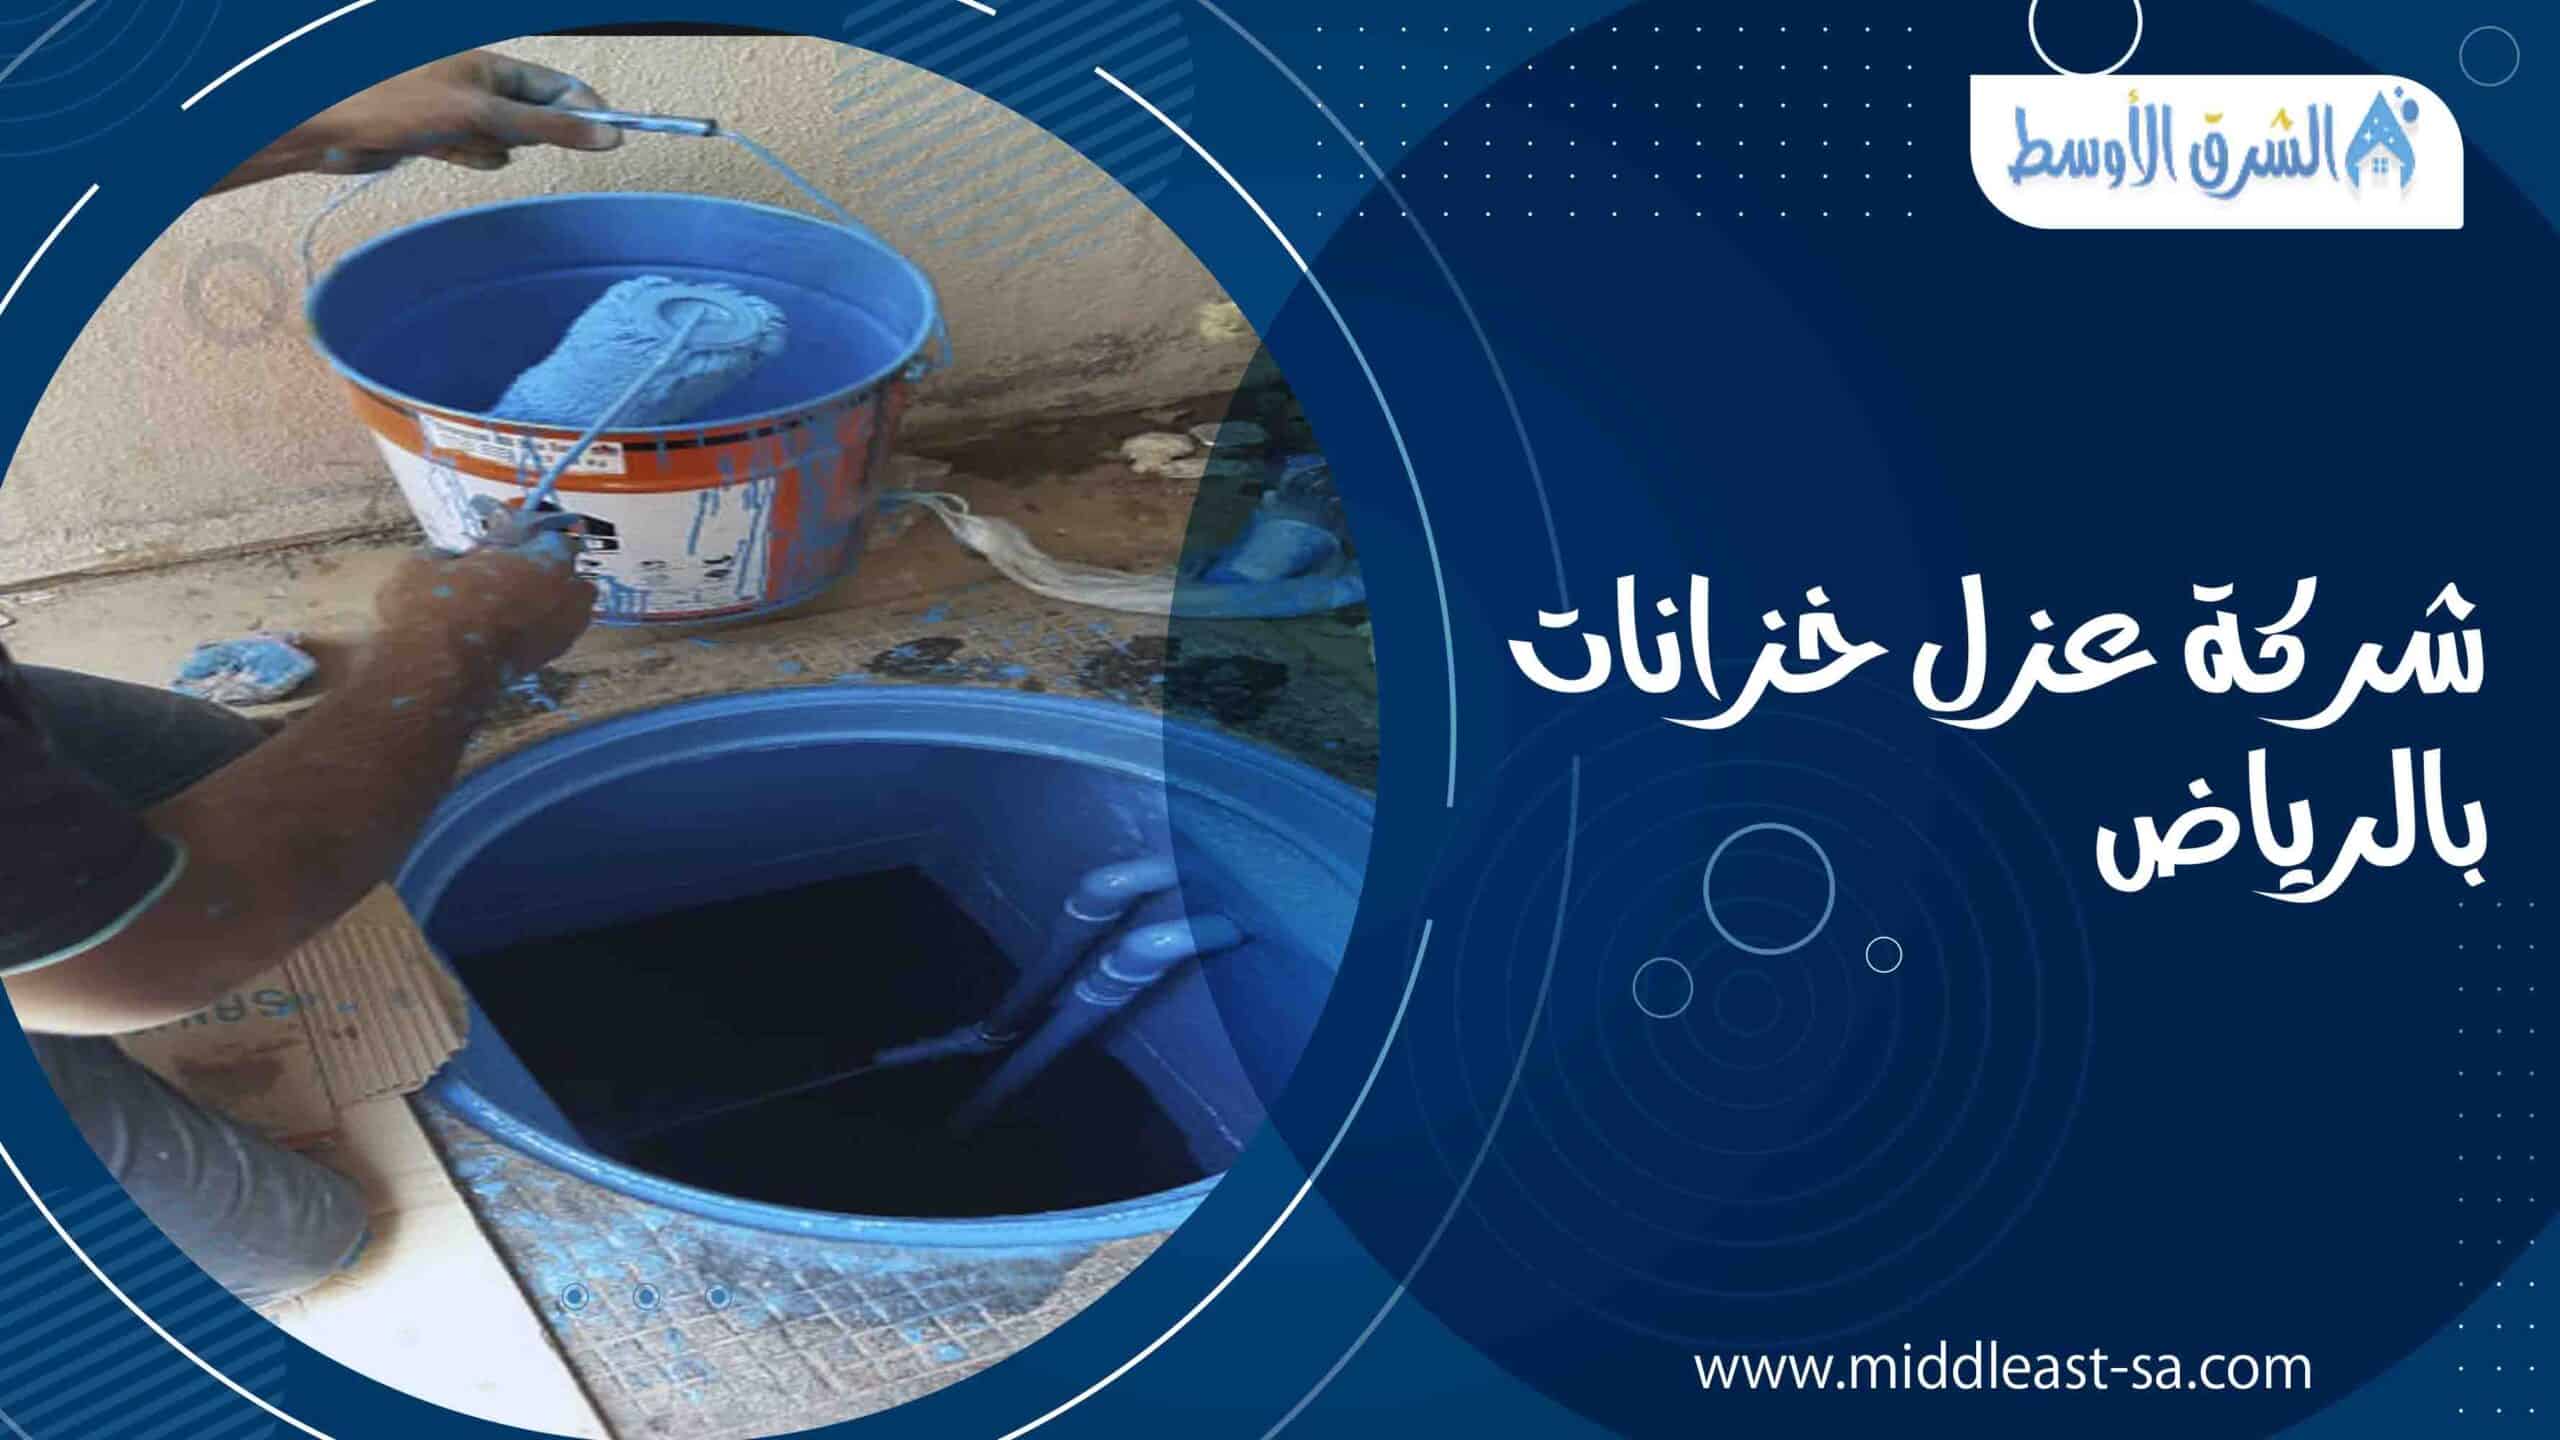 sewage plumbing-middleast-sa